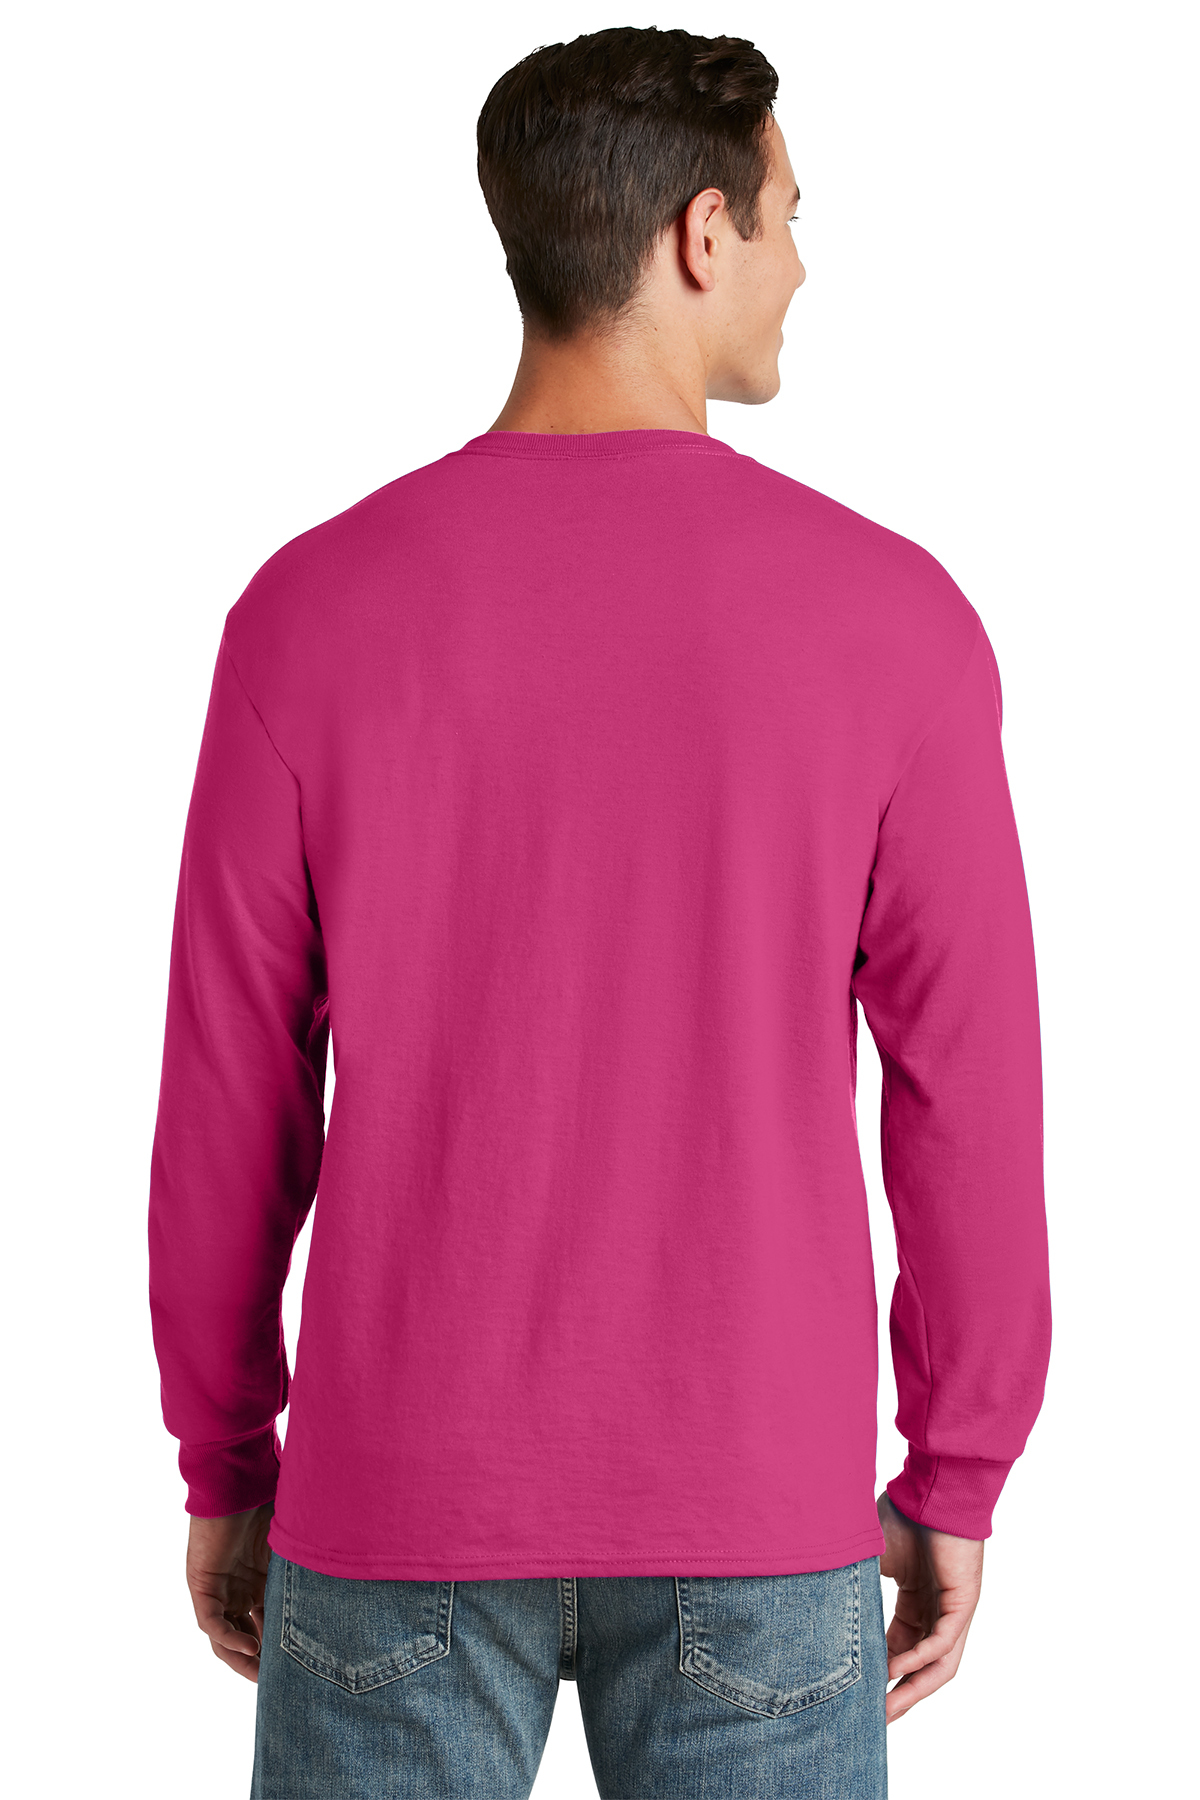 Jerzees - Dri-Power 50/50 Cotton/Poly Long Sleeve T-Shirt | Product ...